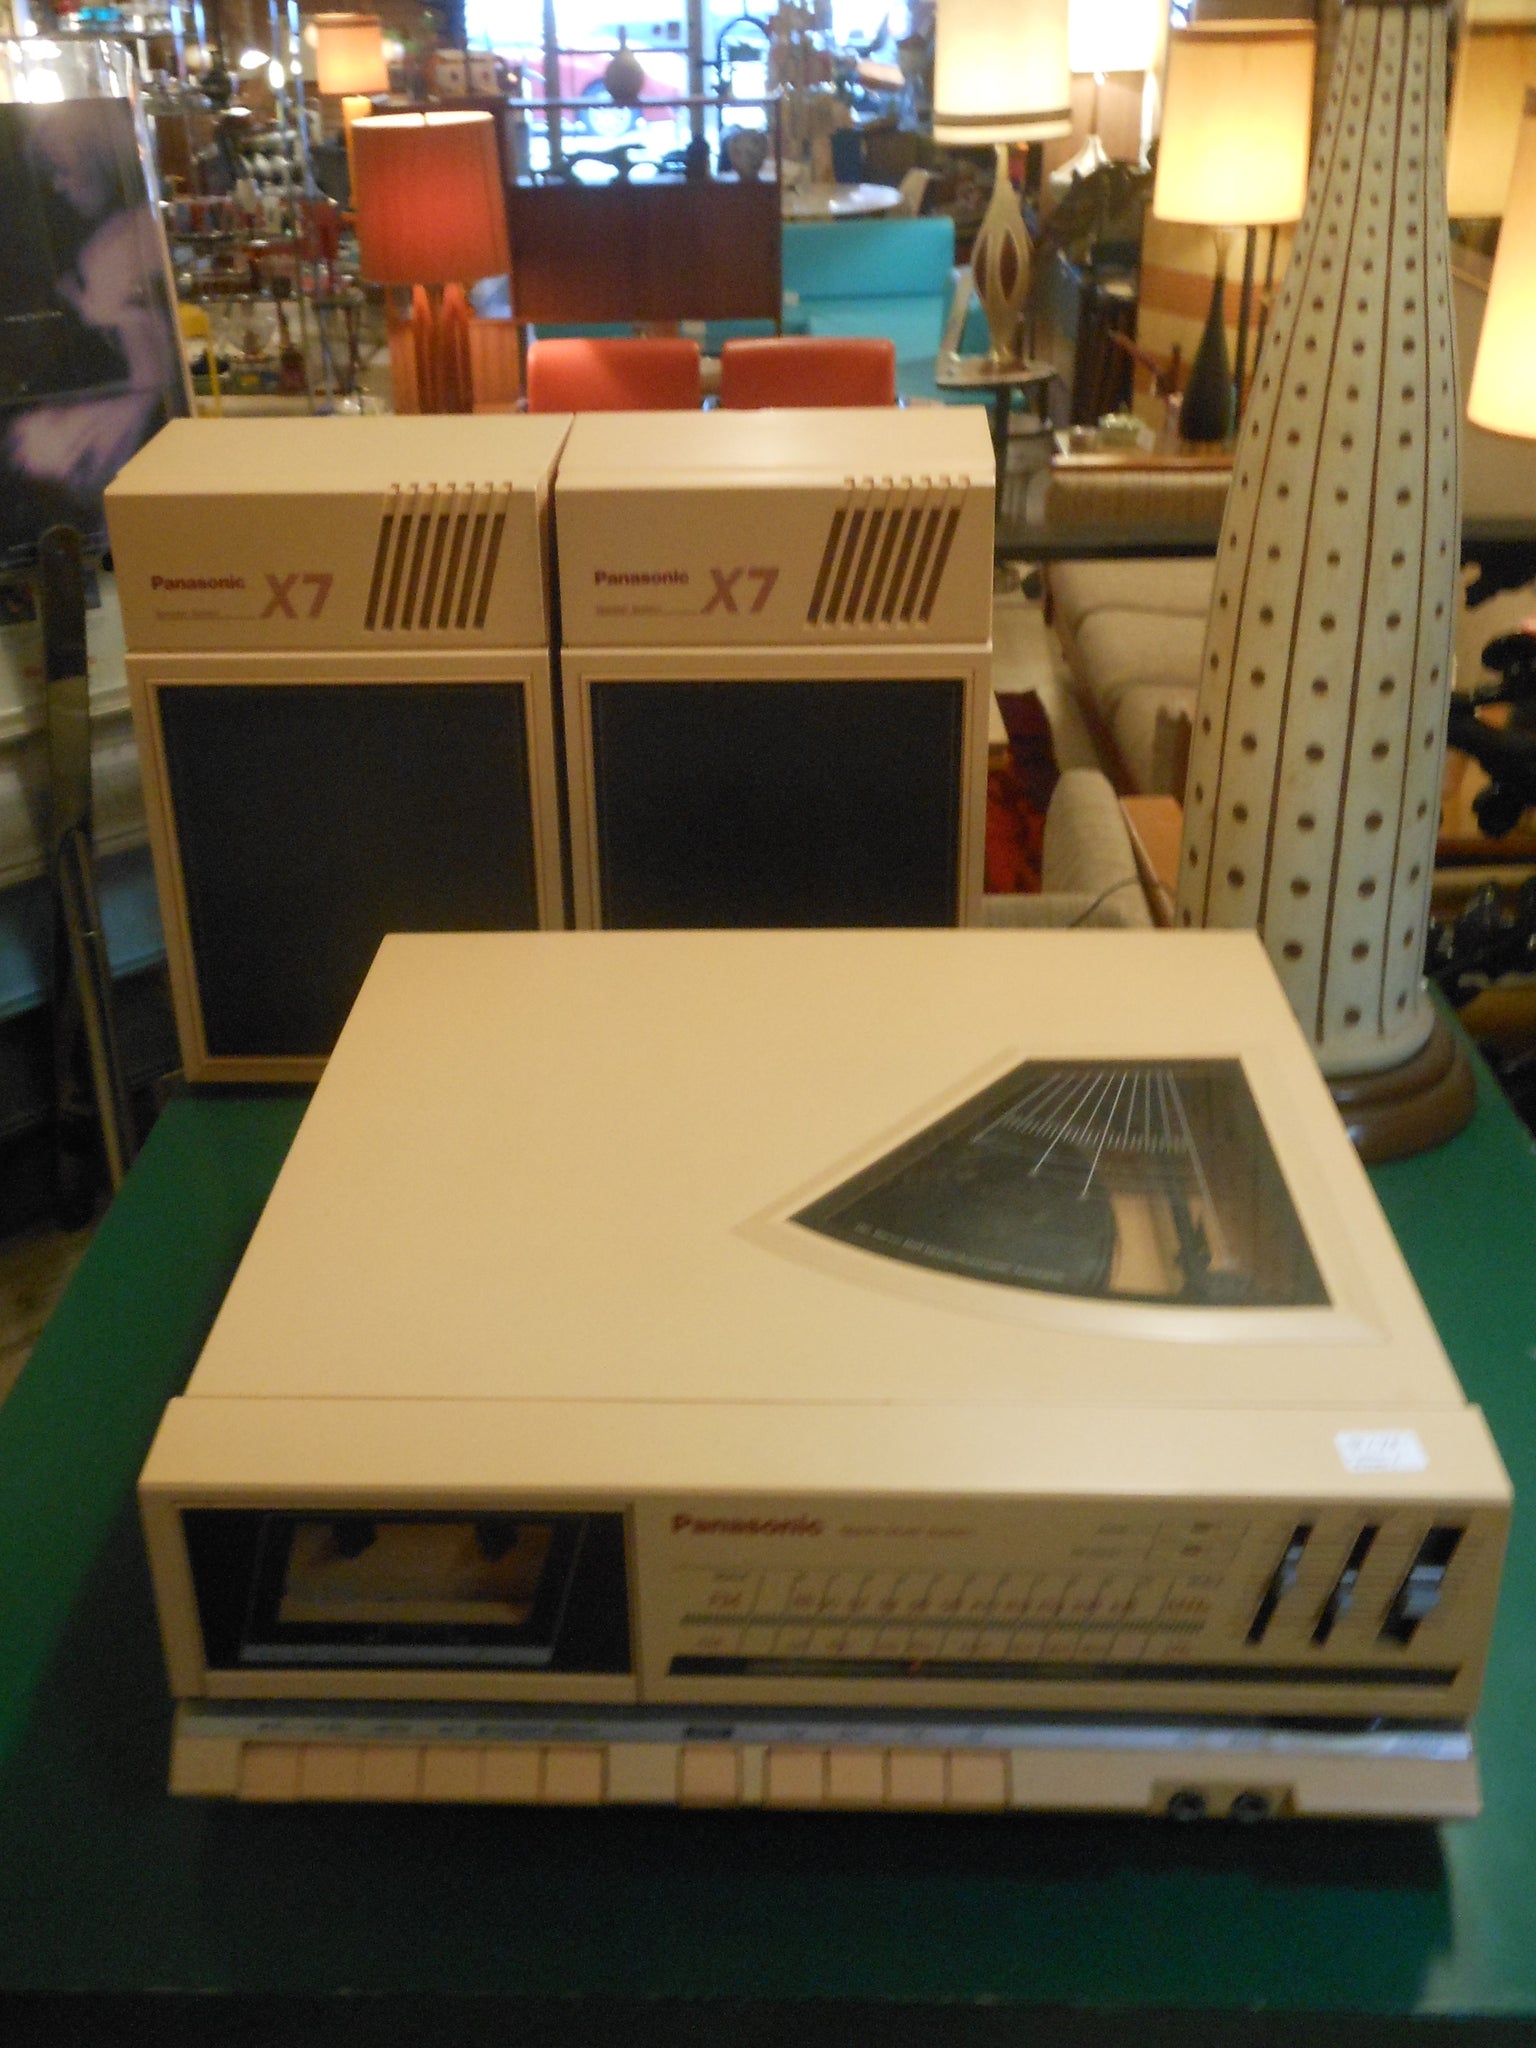 1985 Panasonic X7 Turntable, Cassette, Radio & Speakers Stereo